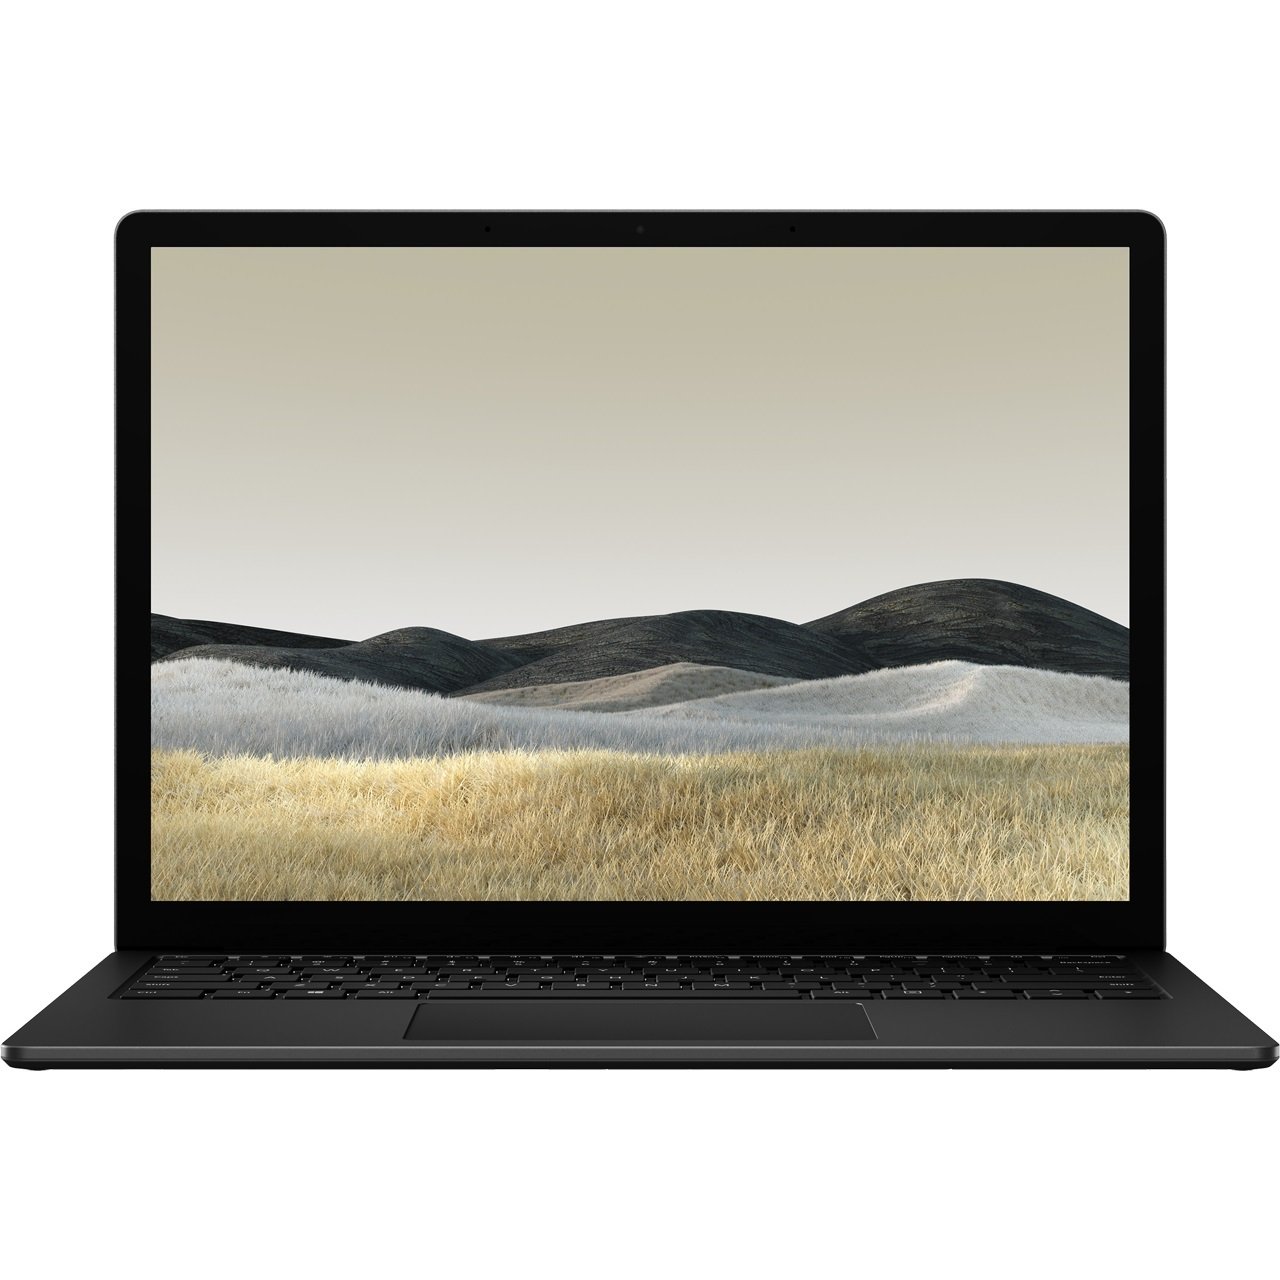 Microsoft Surface Laptop 3 13.5in i5 8GB 256GB - Black